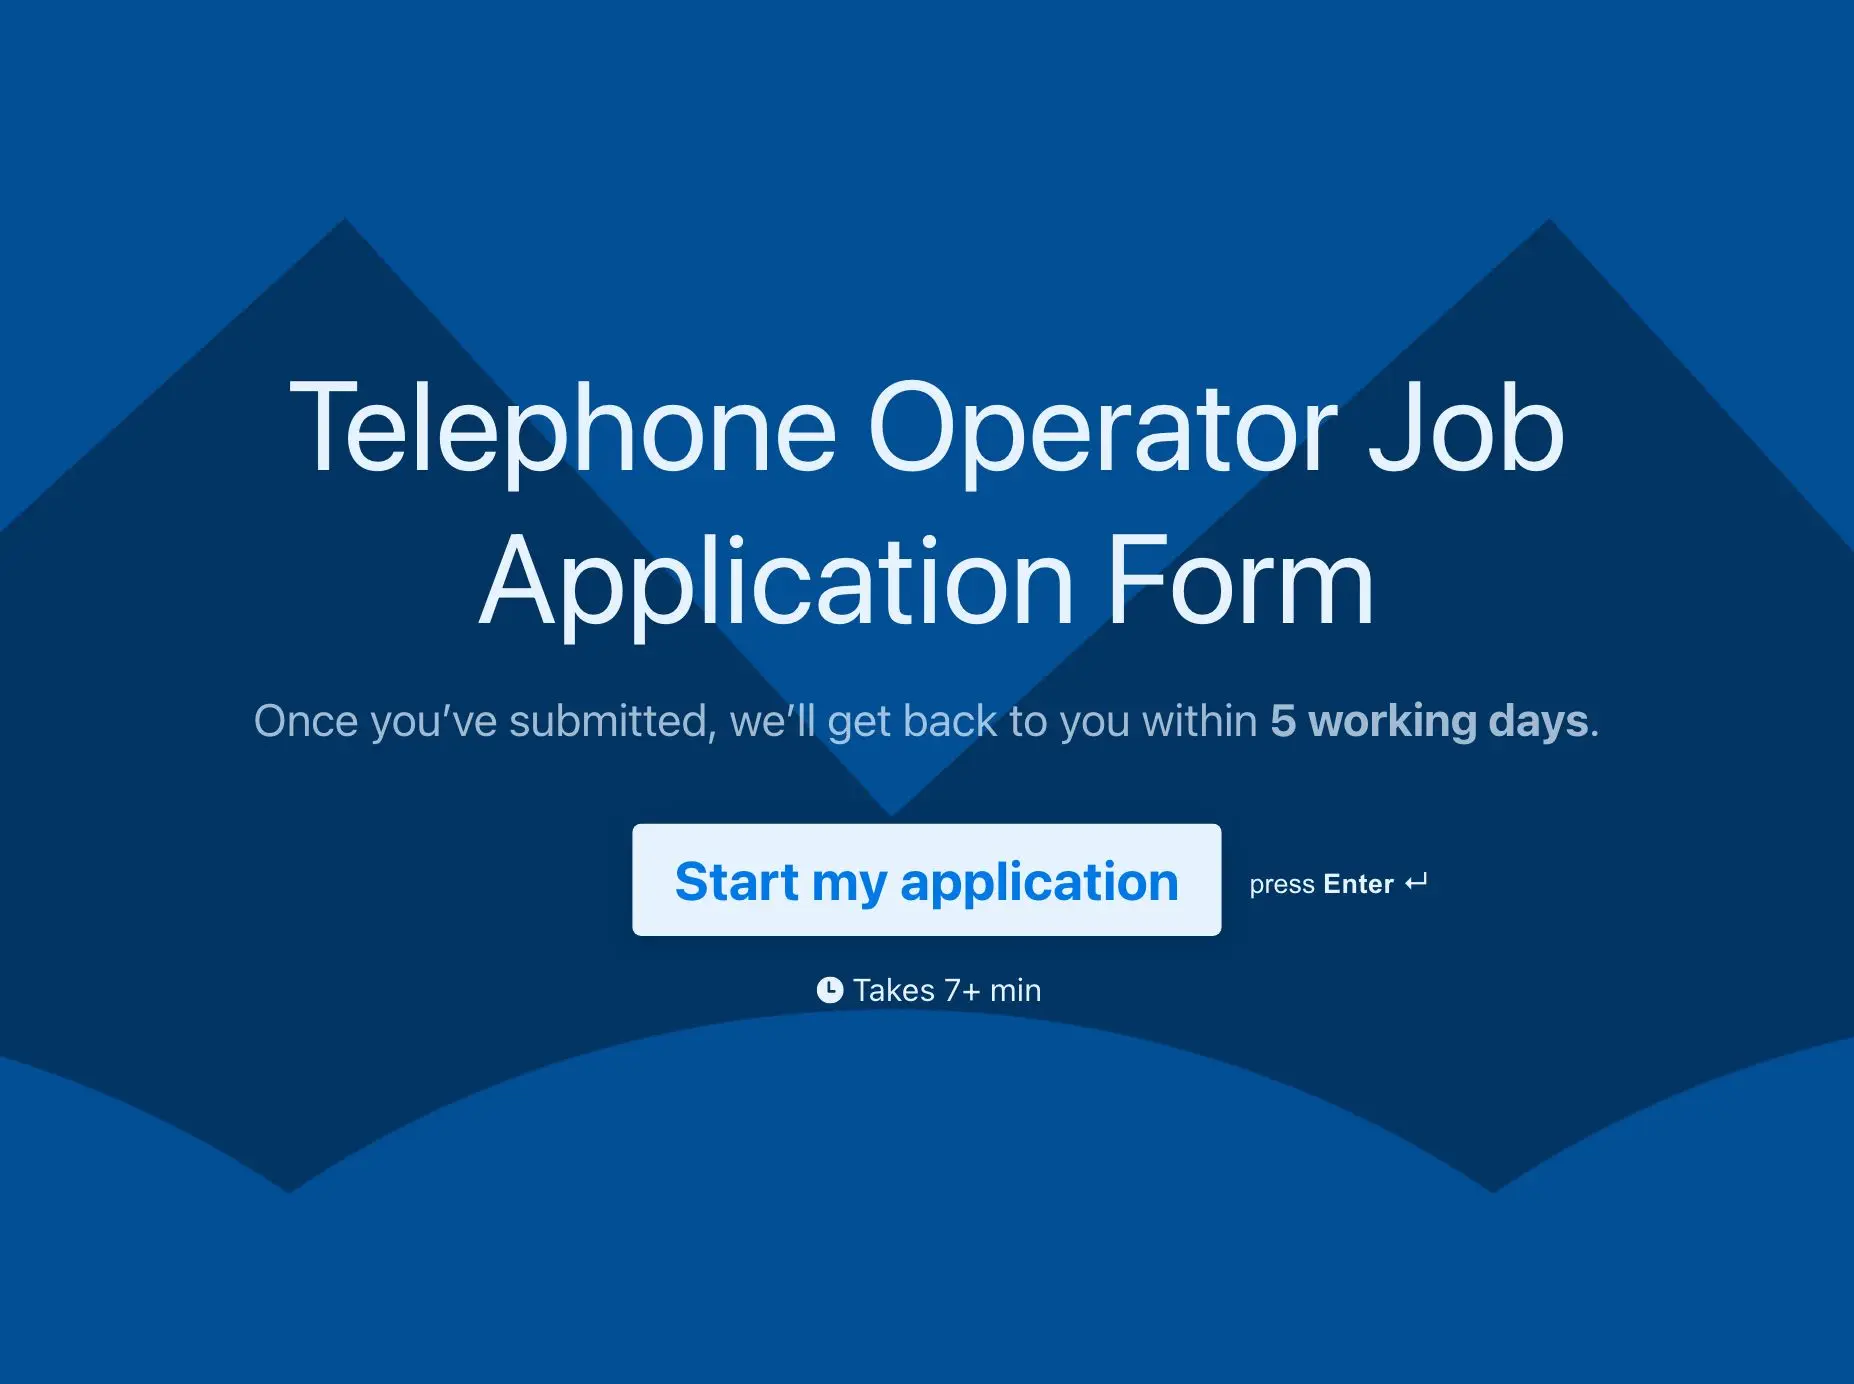 Telephone Operator Job Application Form Template Hero